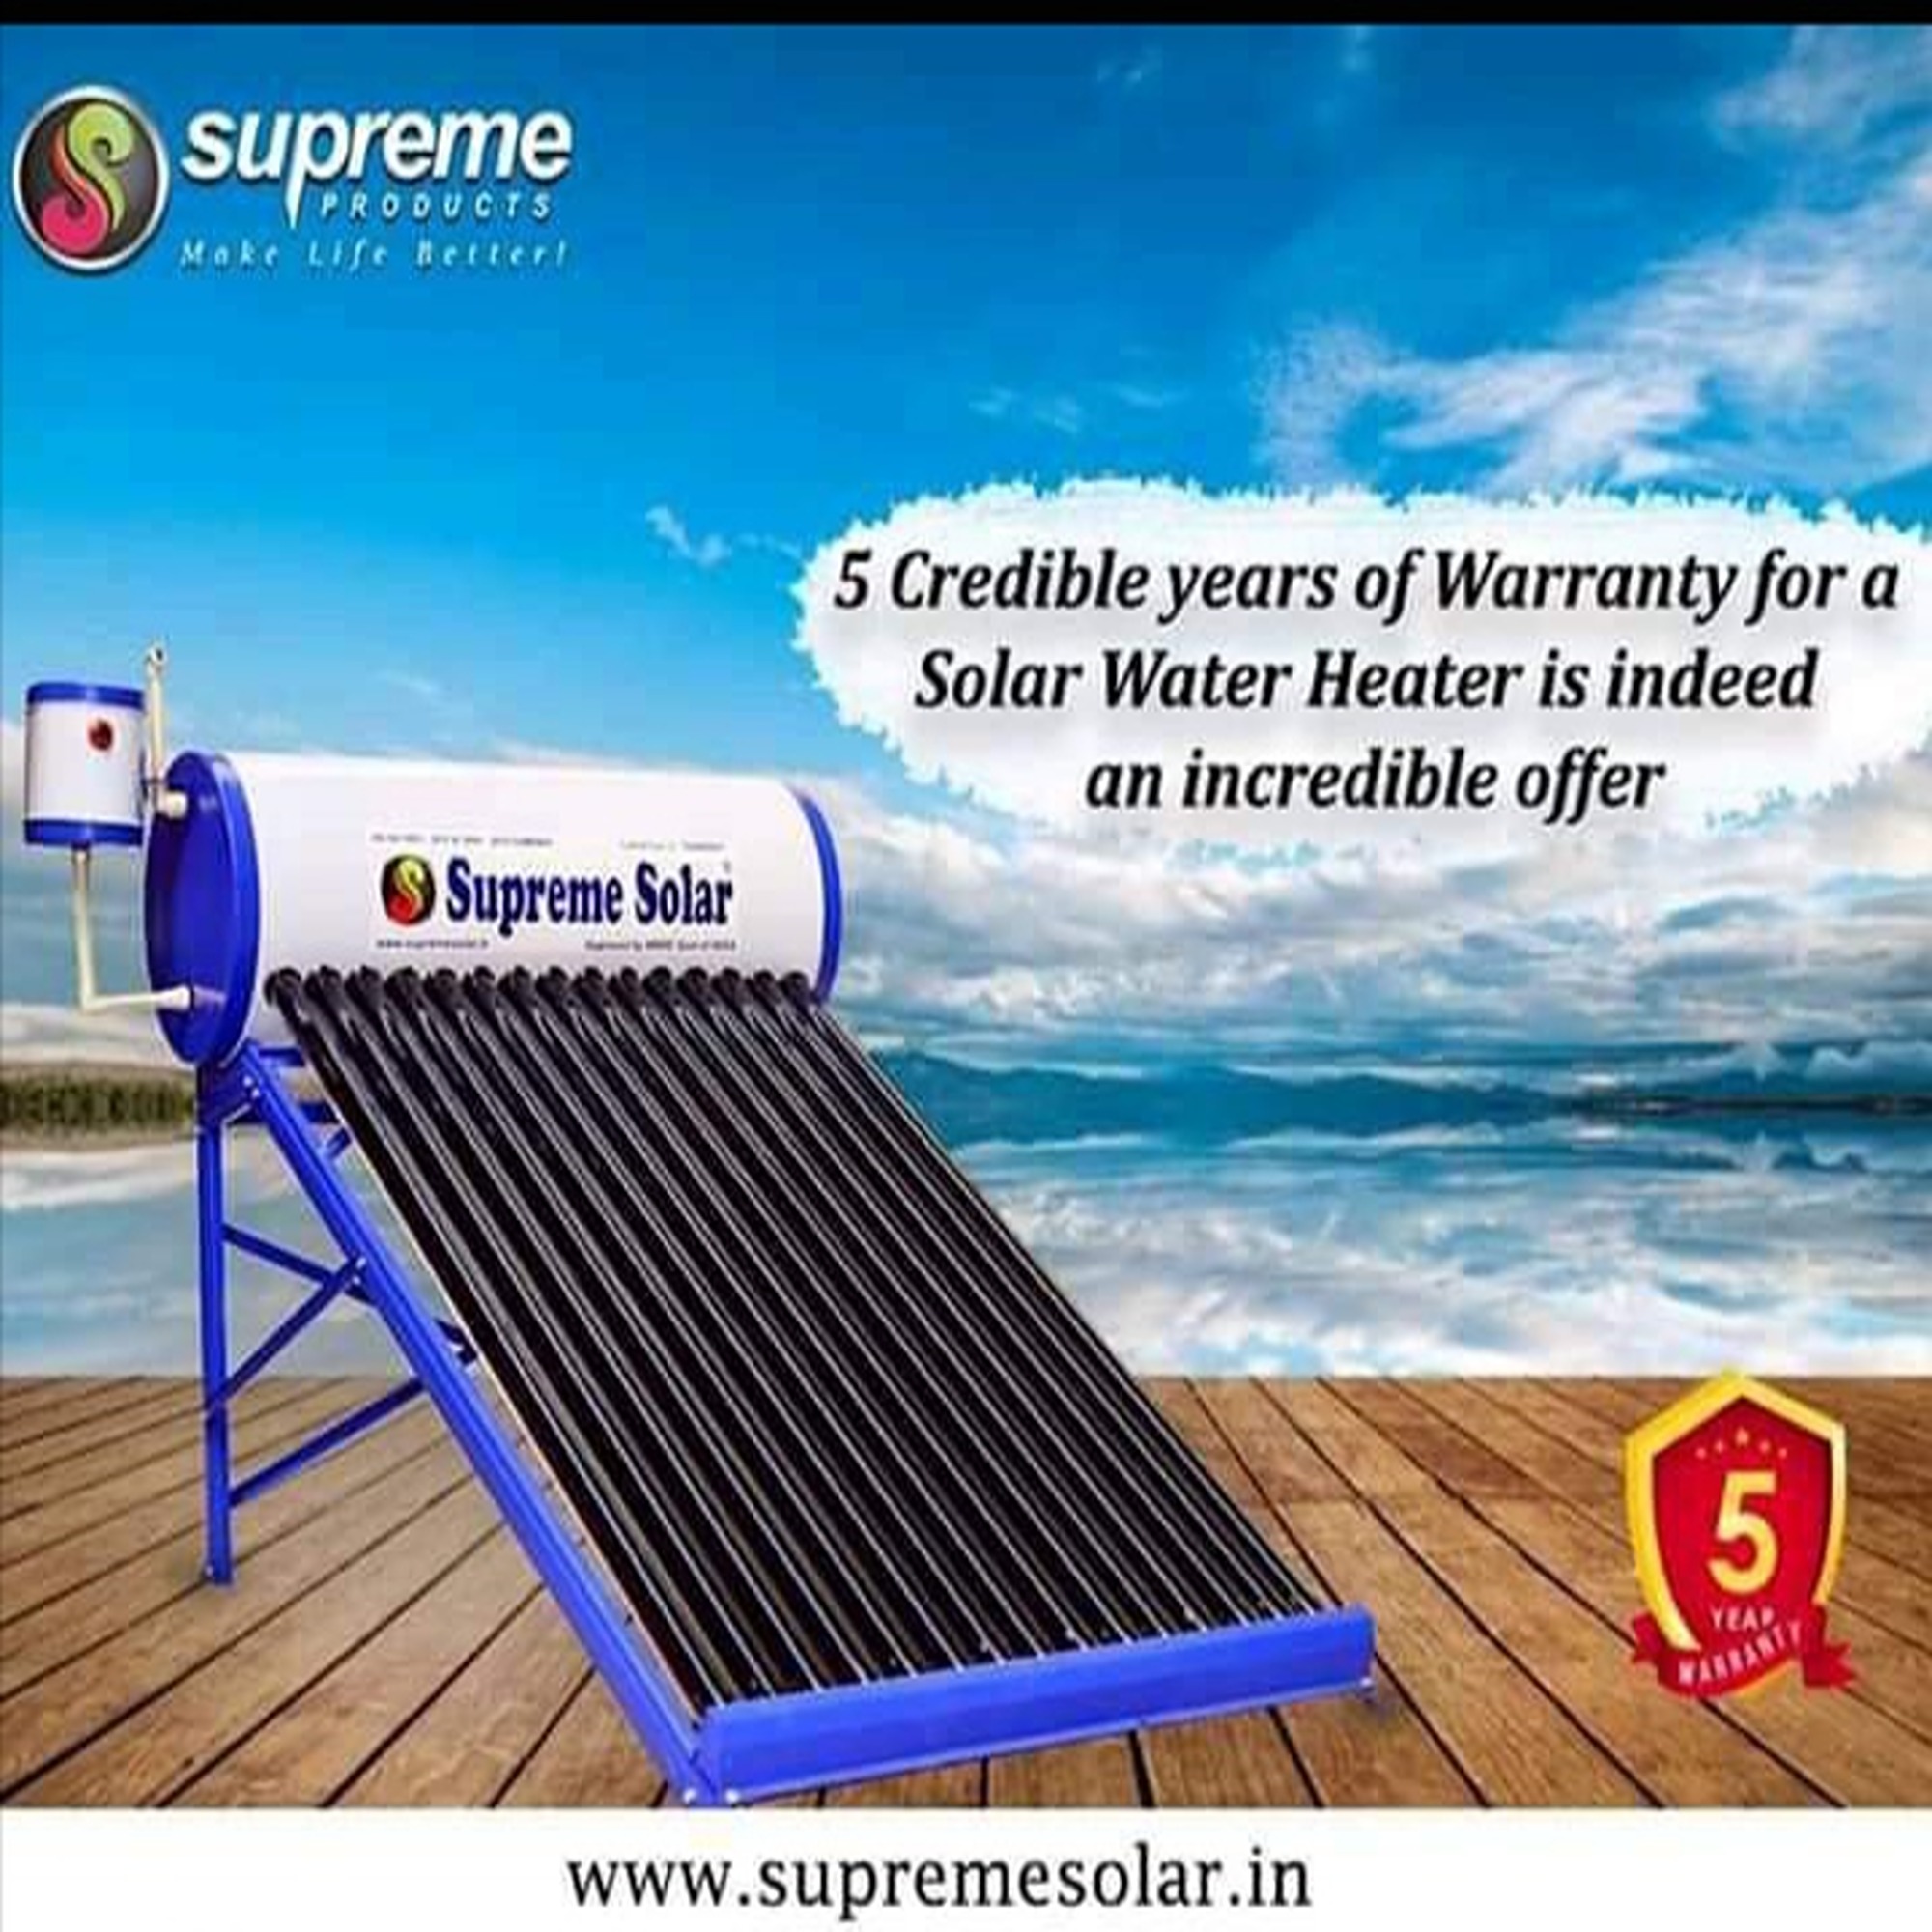 Supreme Solar 100 Ltr Ceramic Coated Solar Water Heater